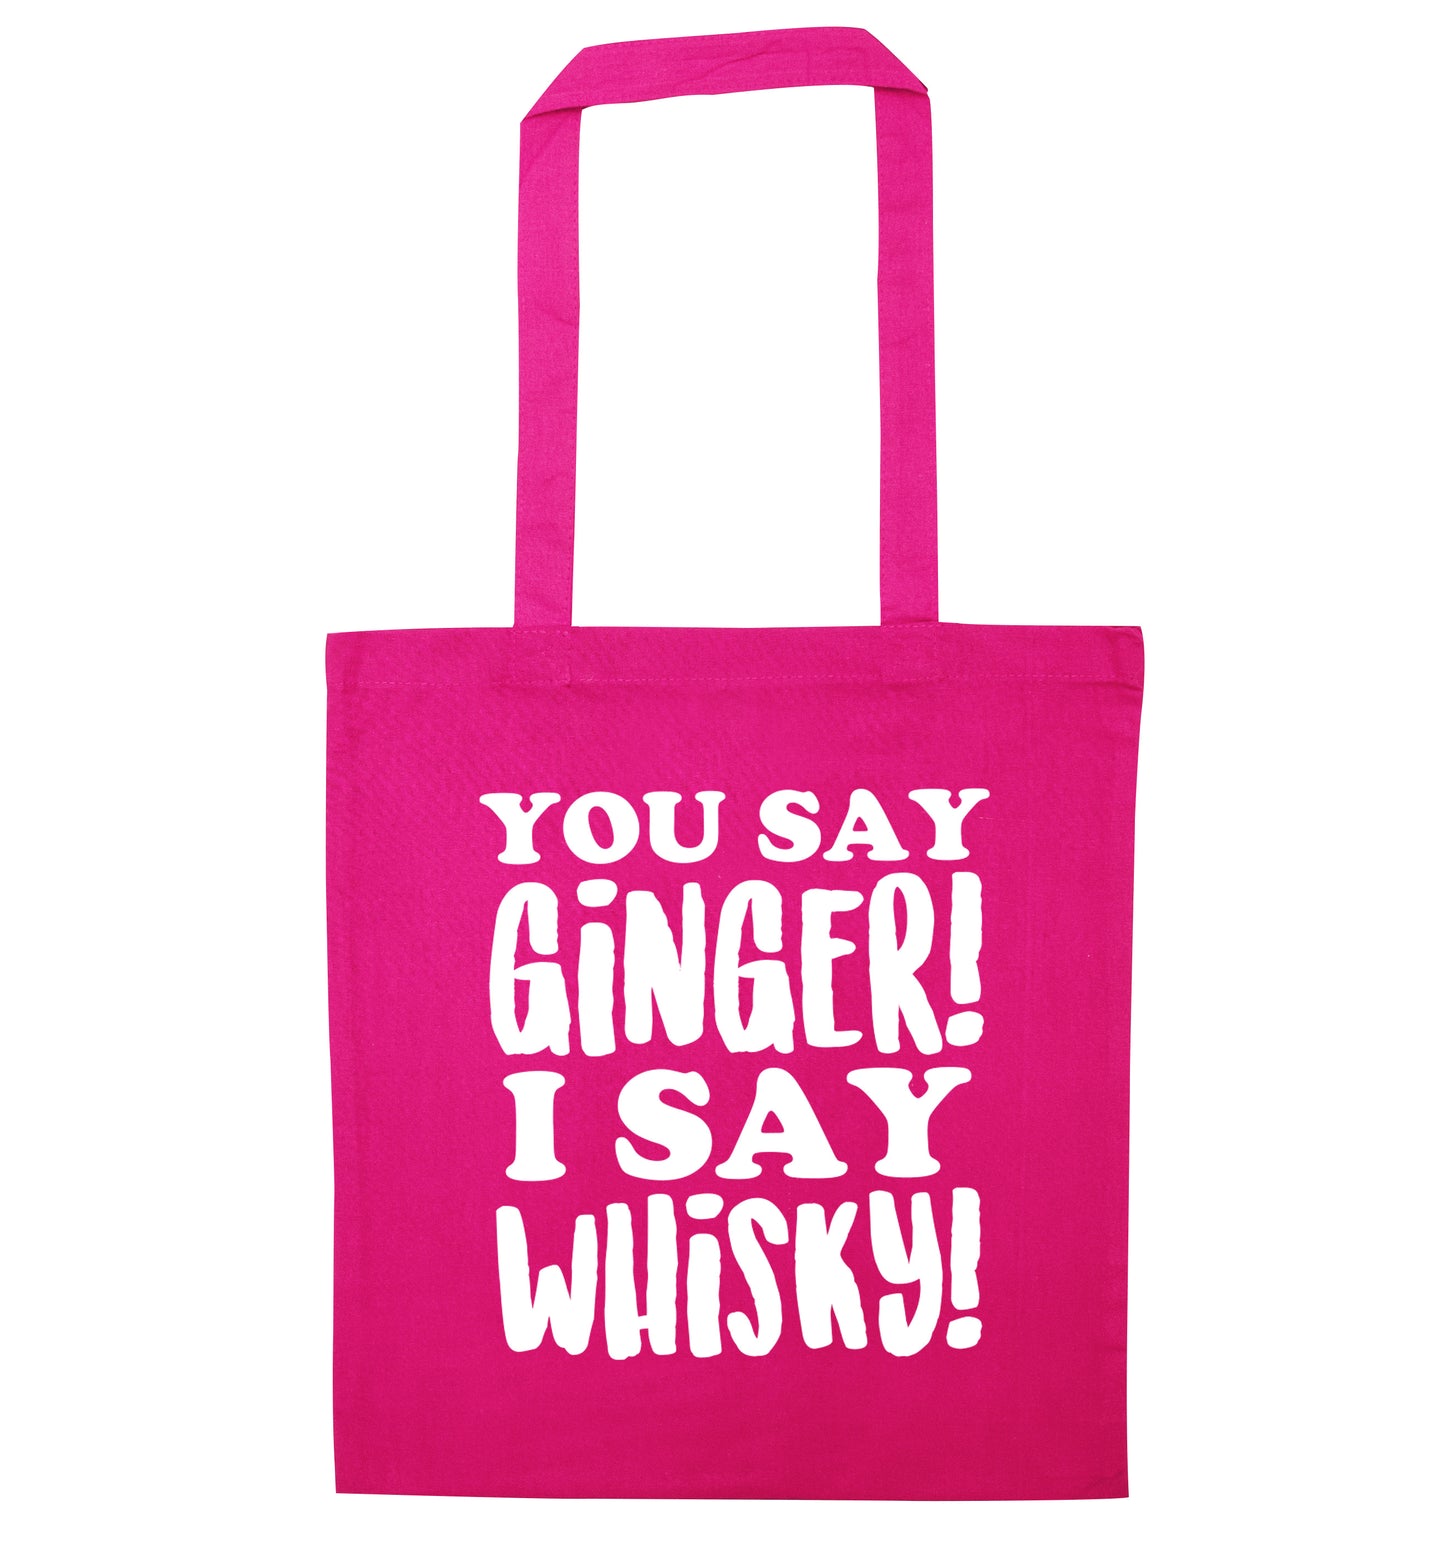 You say ginger I say whisky! pink tote bag